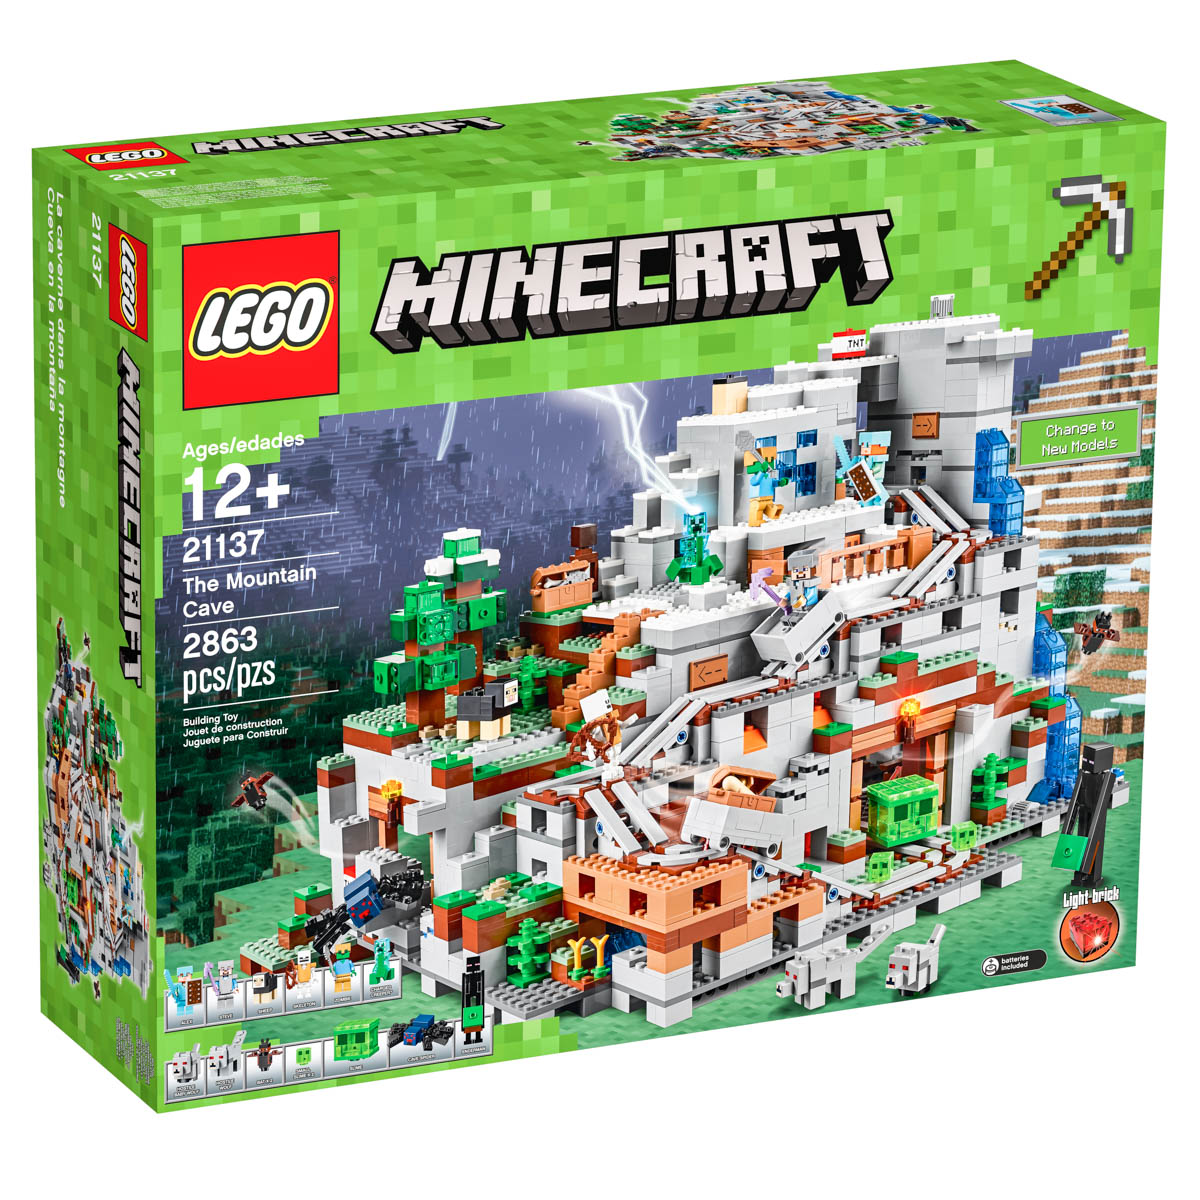 the mountain cave minecraft lego set